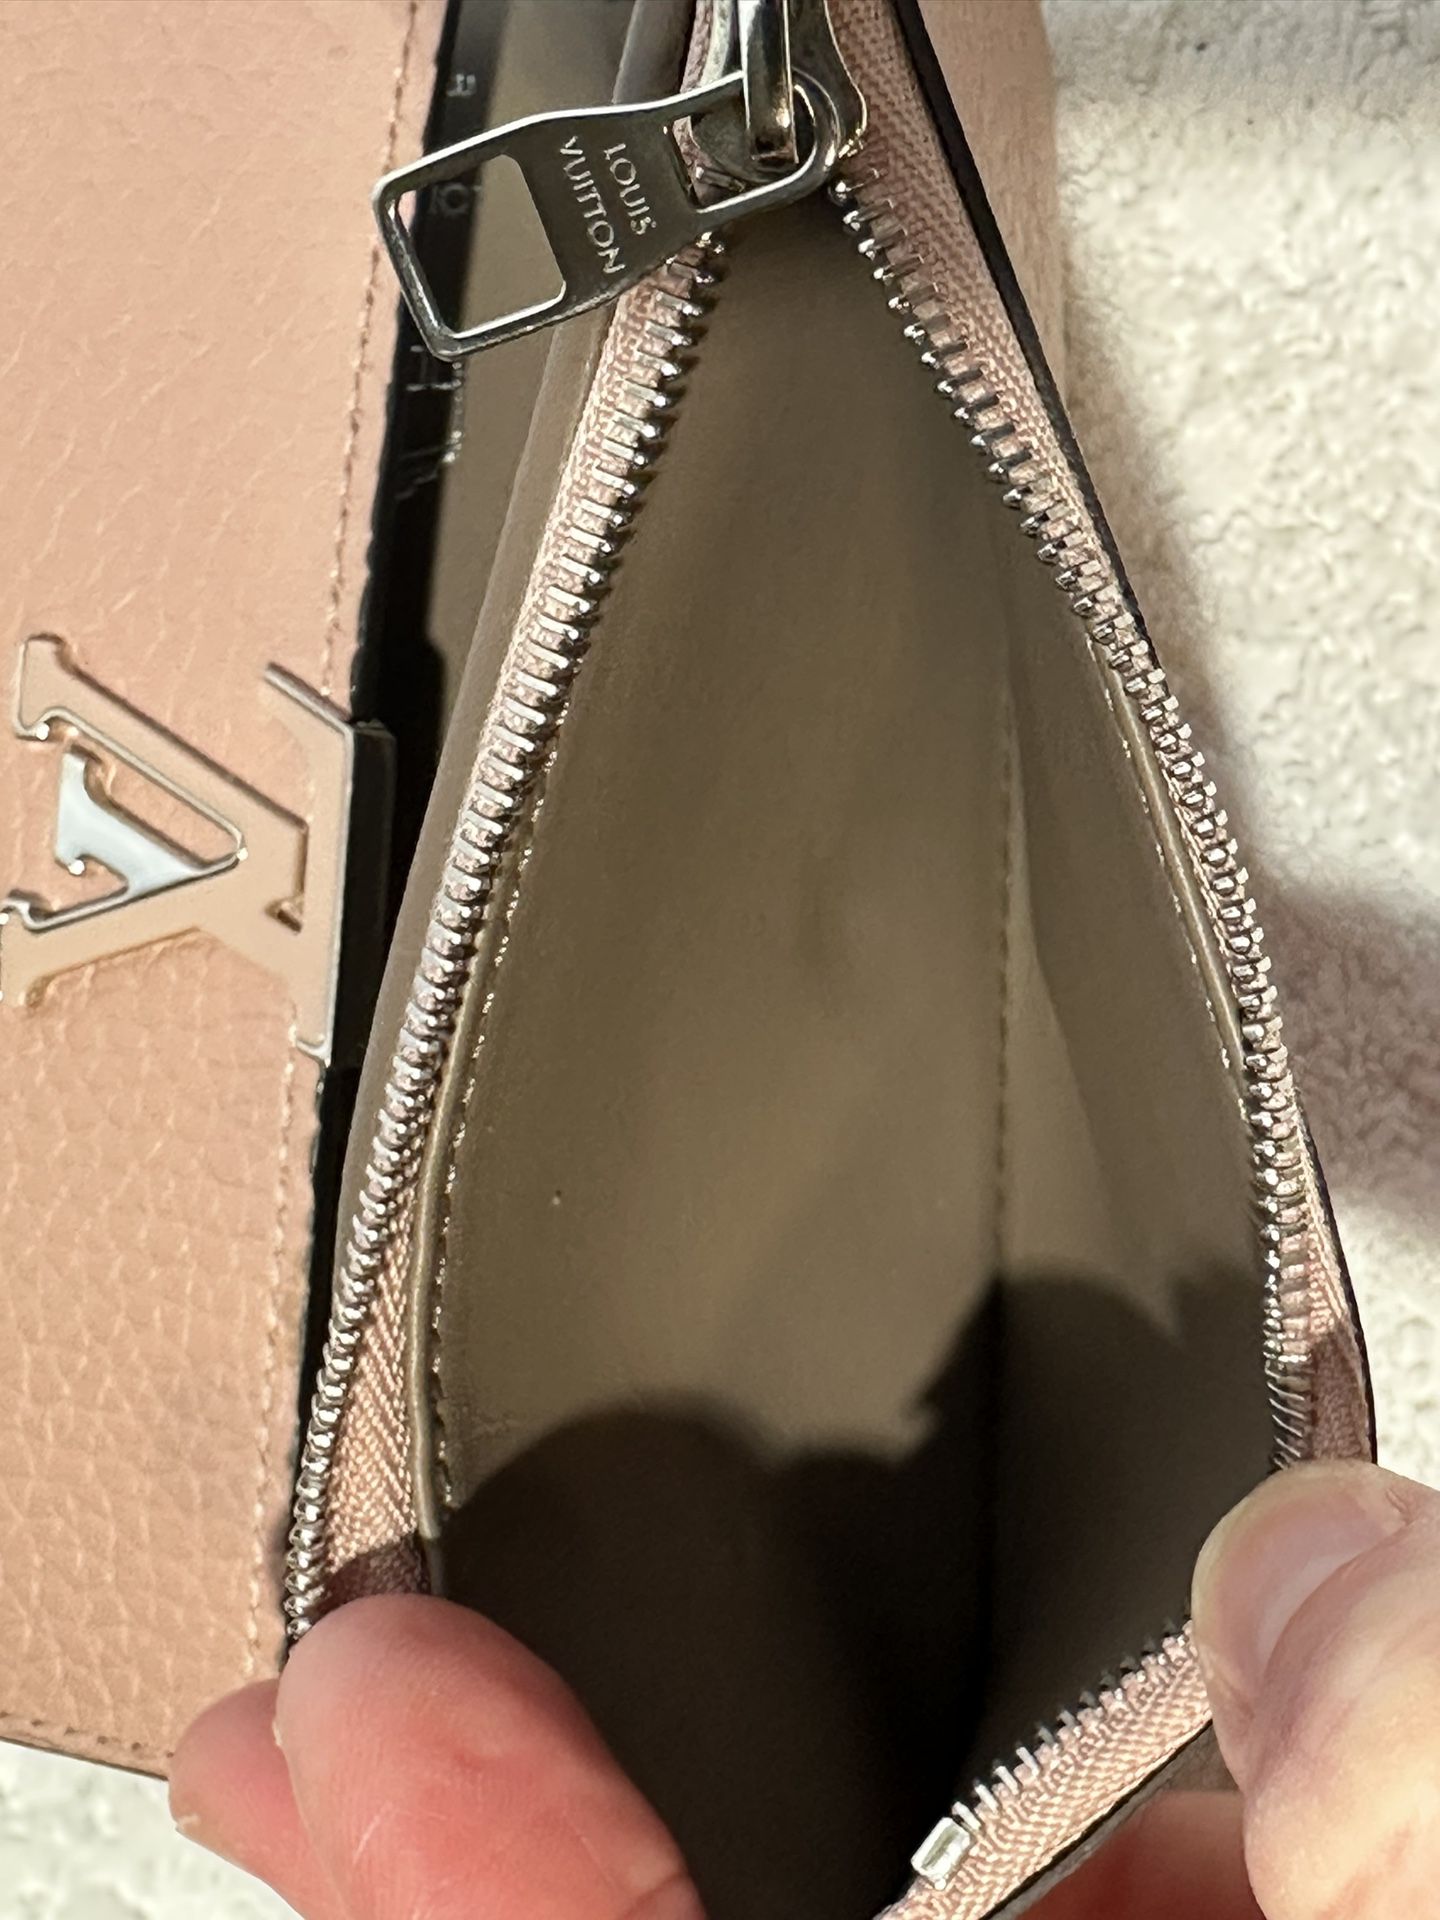 Louis Vuitton Capucines Compact Wallet for Sale in Scottsdale, AZ - OfferUp